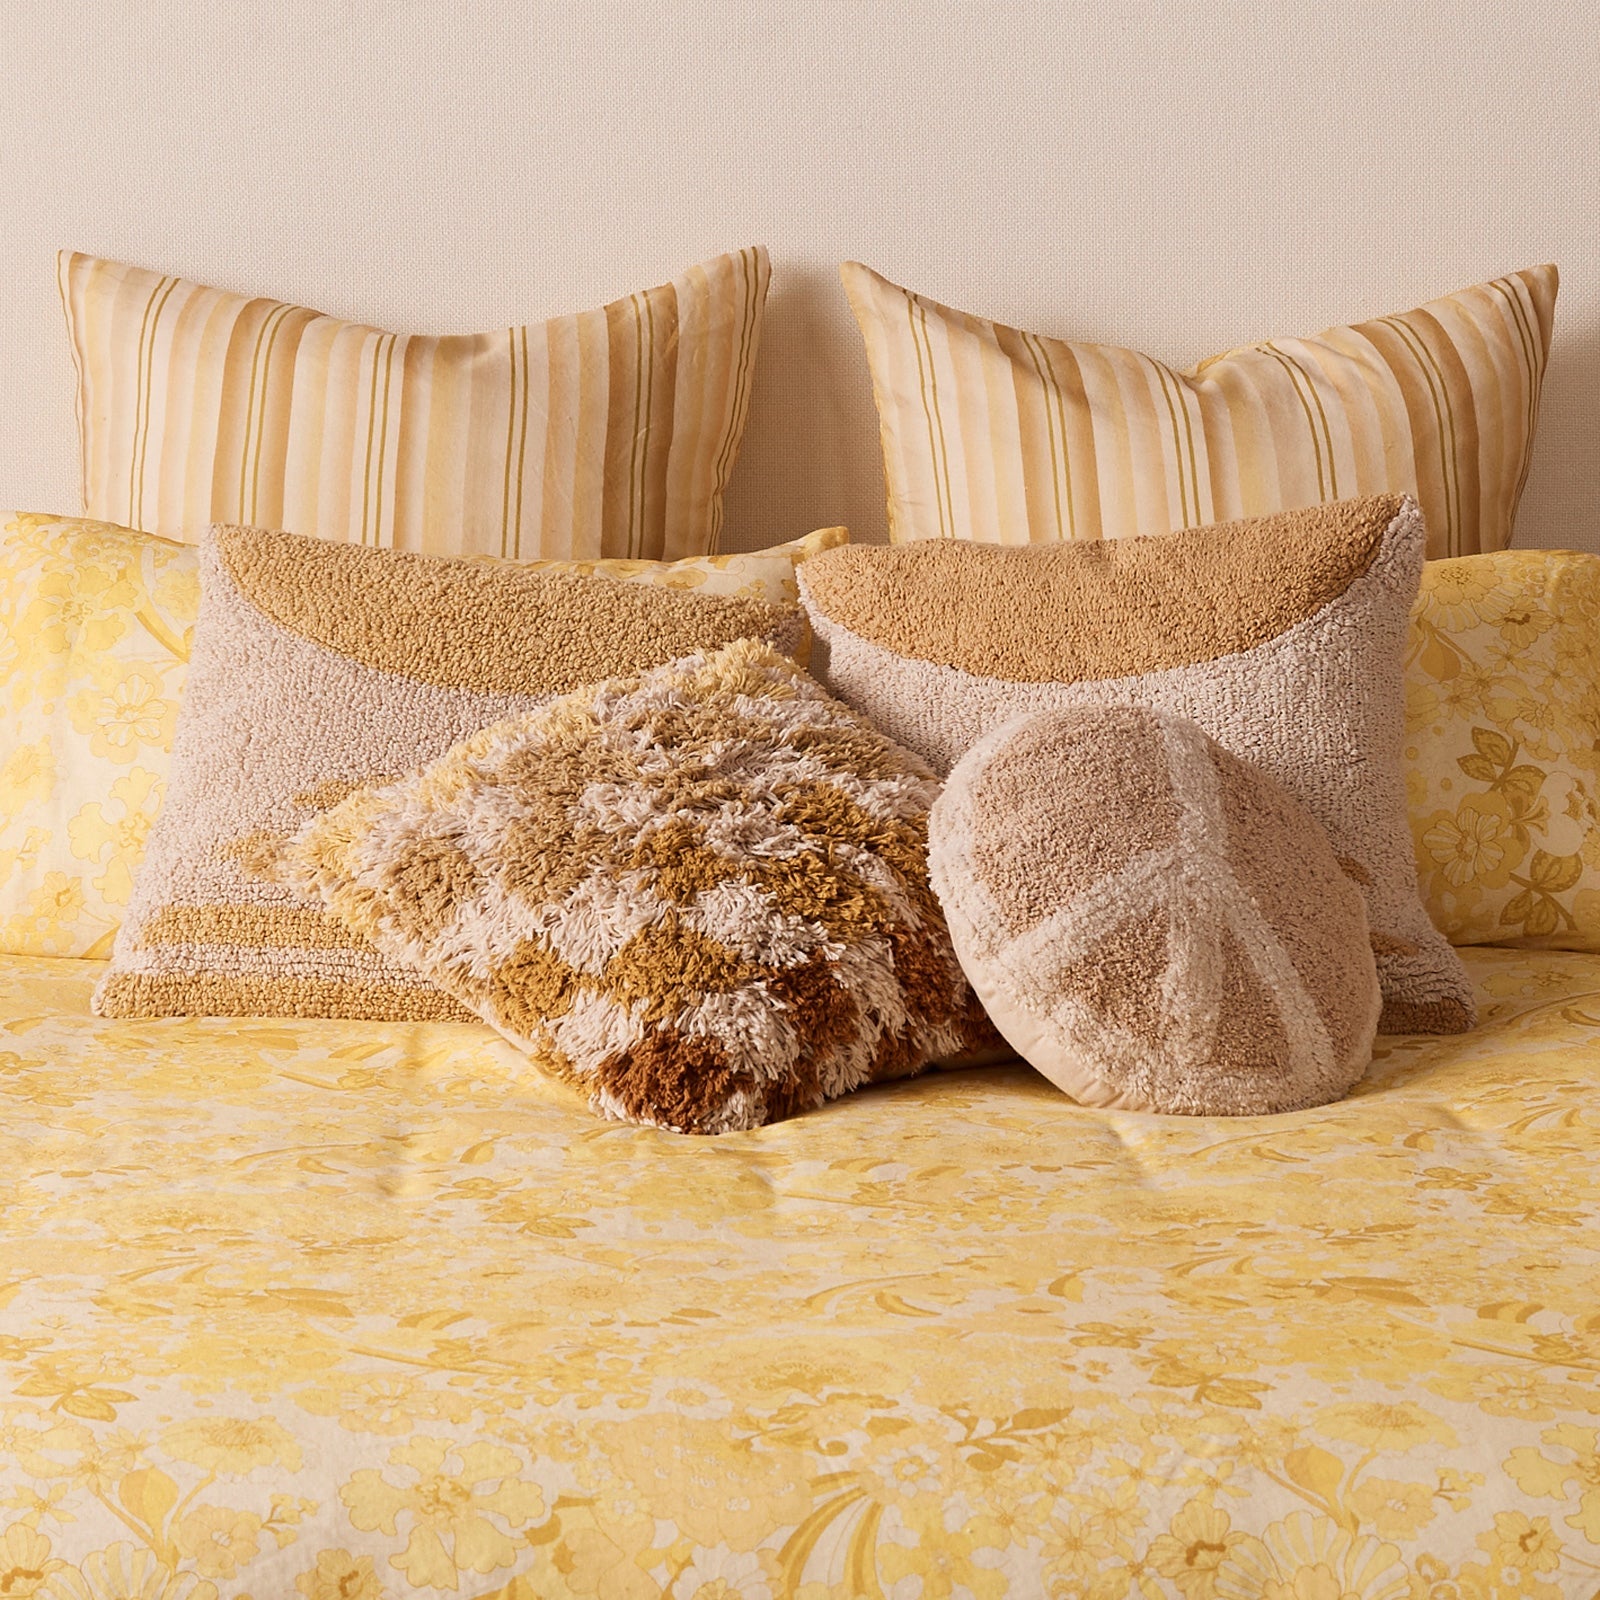 FREE Sundaze Floral Standard Pillowcase SET